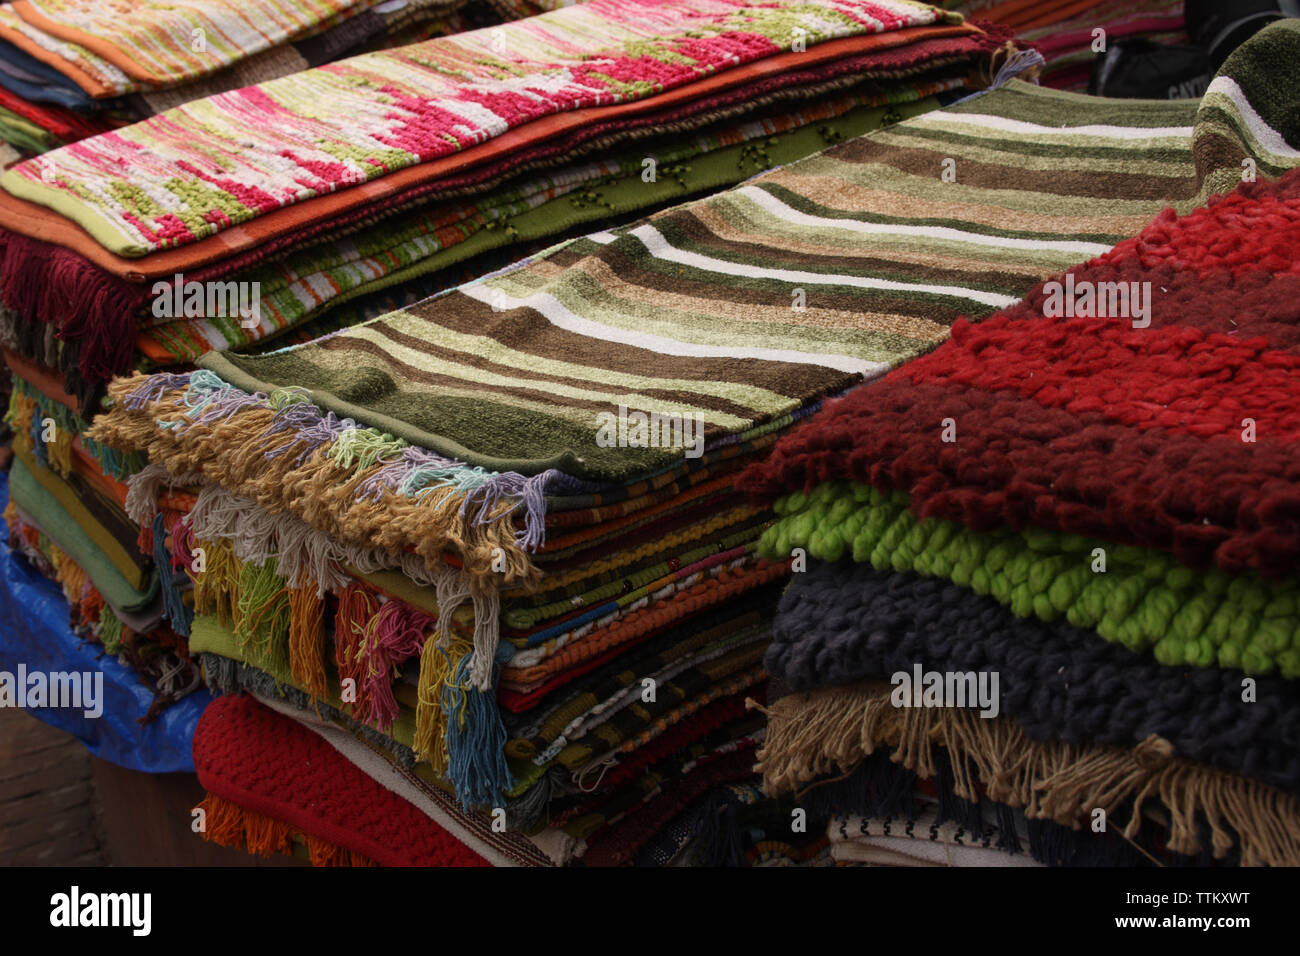 Stacks of doormats at a market stall, Dilli Haat, New delhi, India Stock Photo